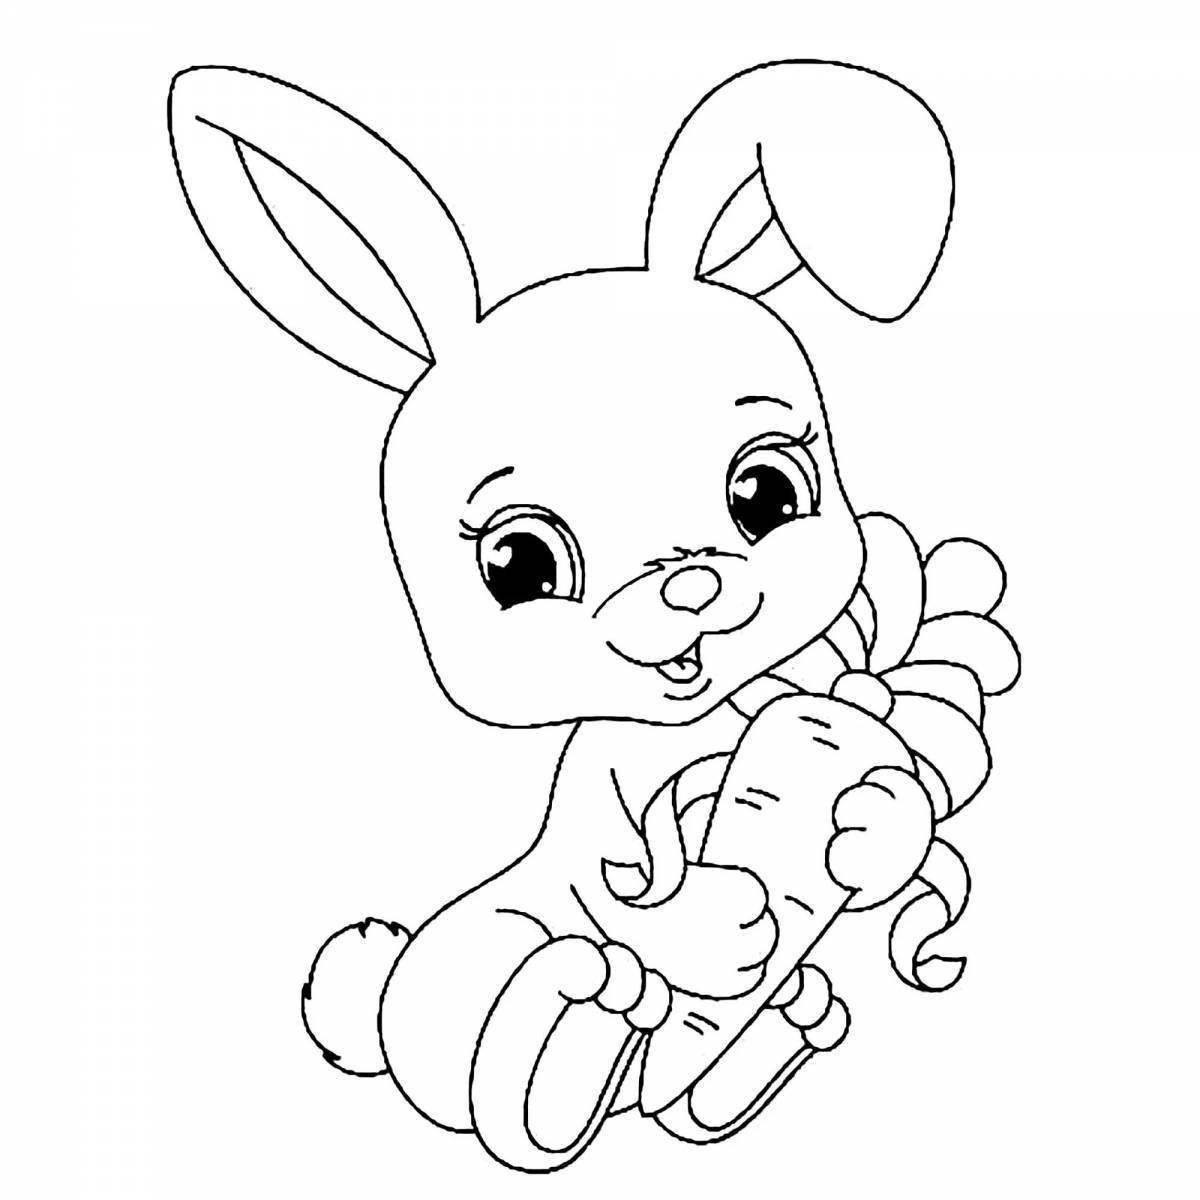 Winking rabbit cartoon coloring book